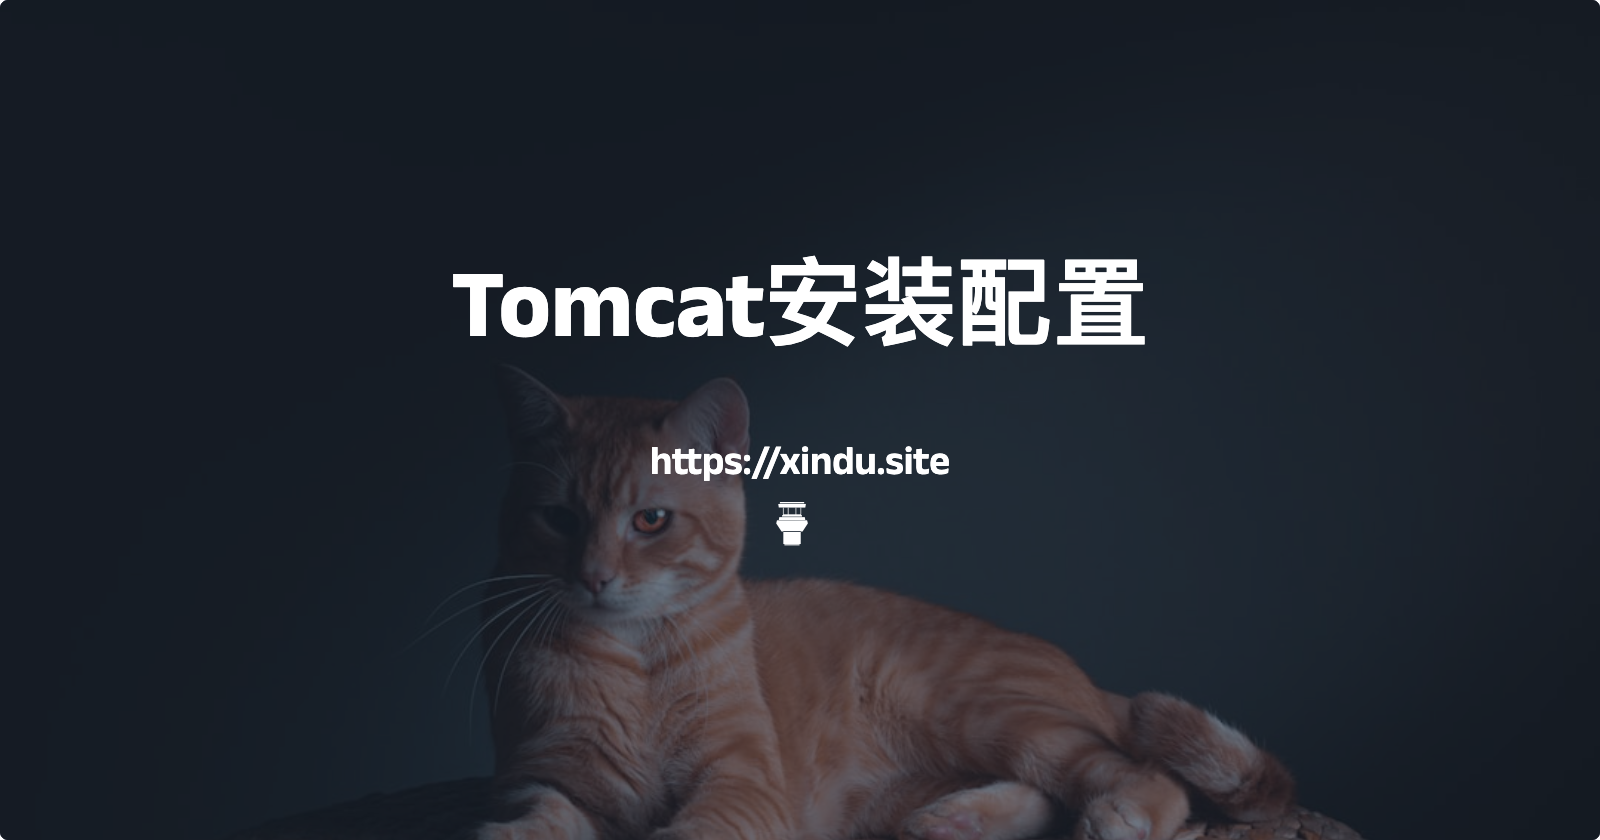 Tomcat在 CentOS 和 Ubuntu 中的安装配置